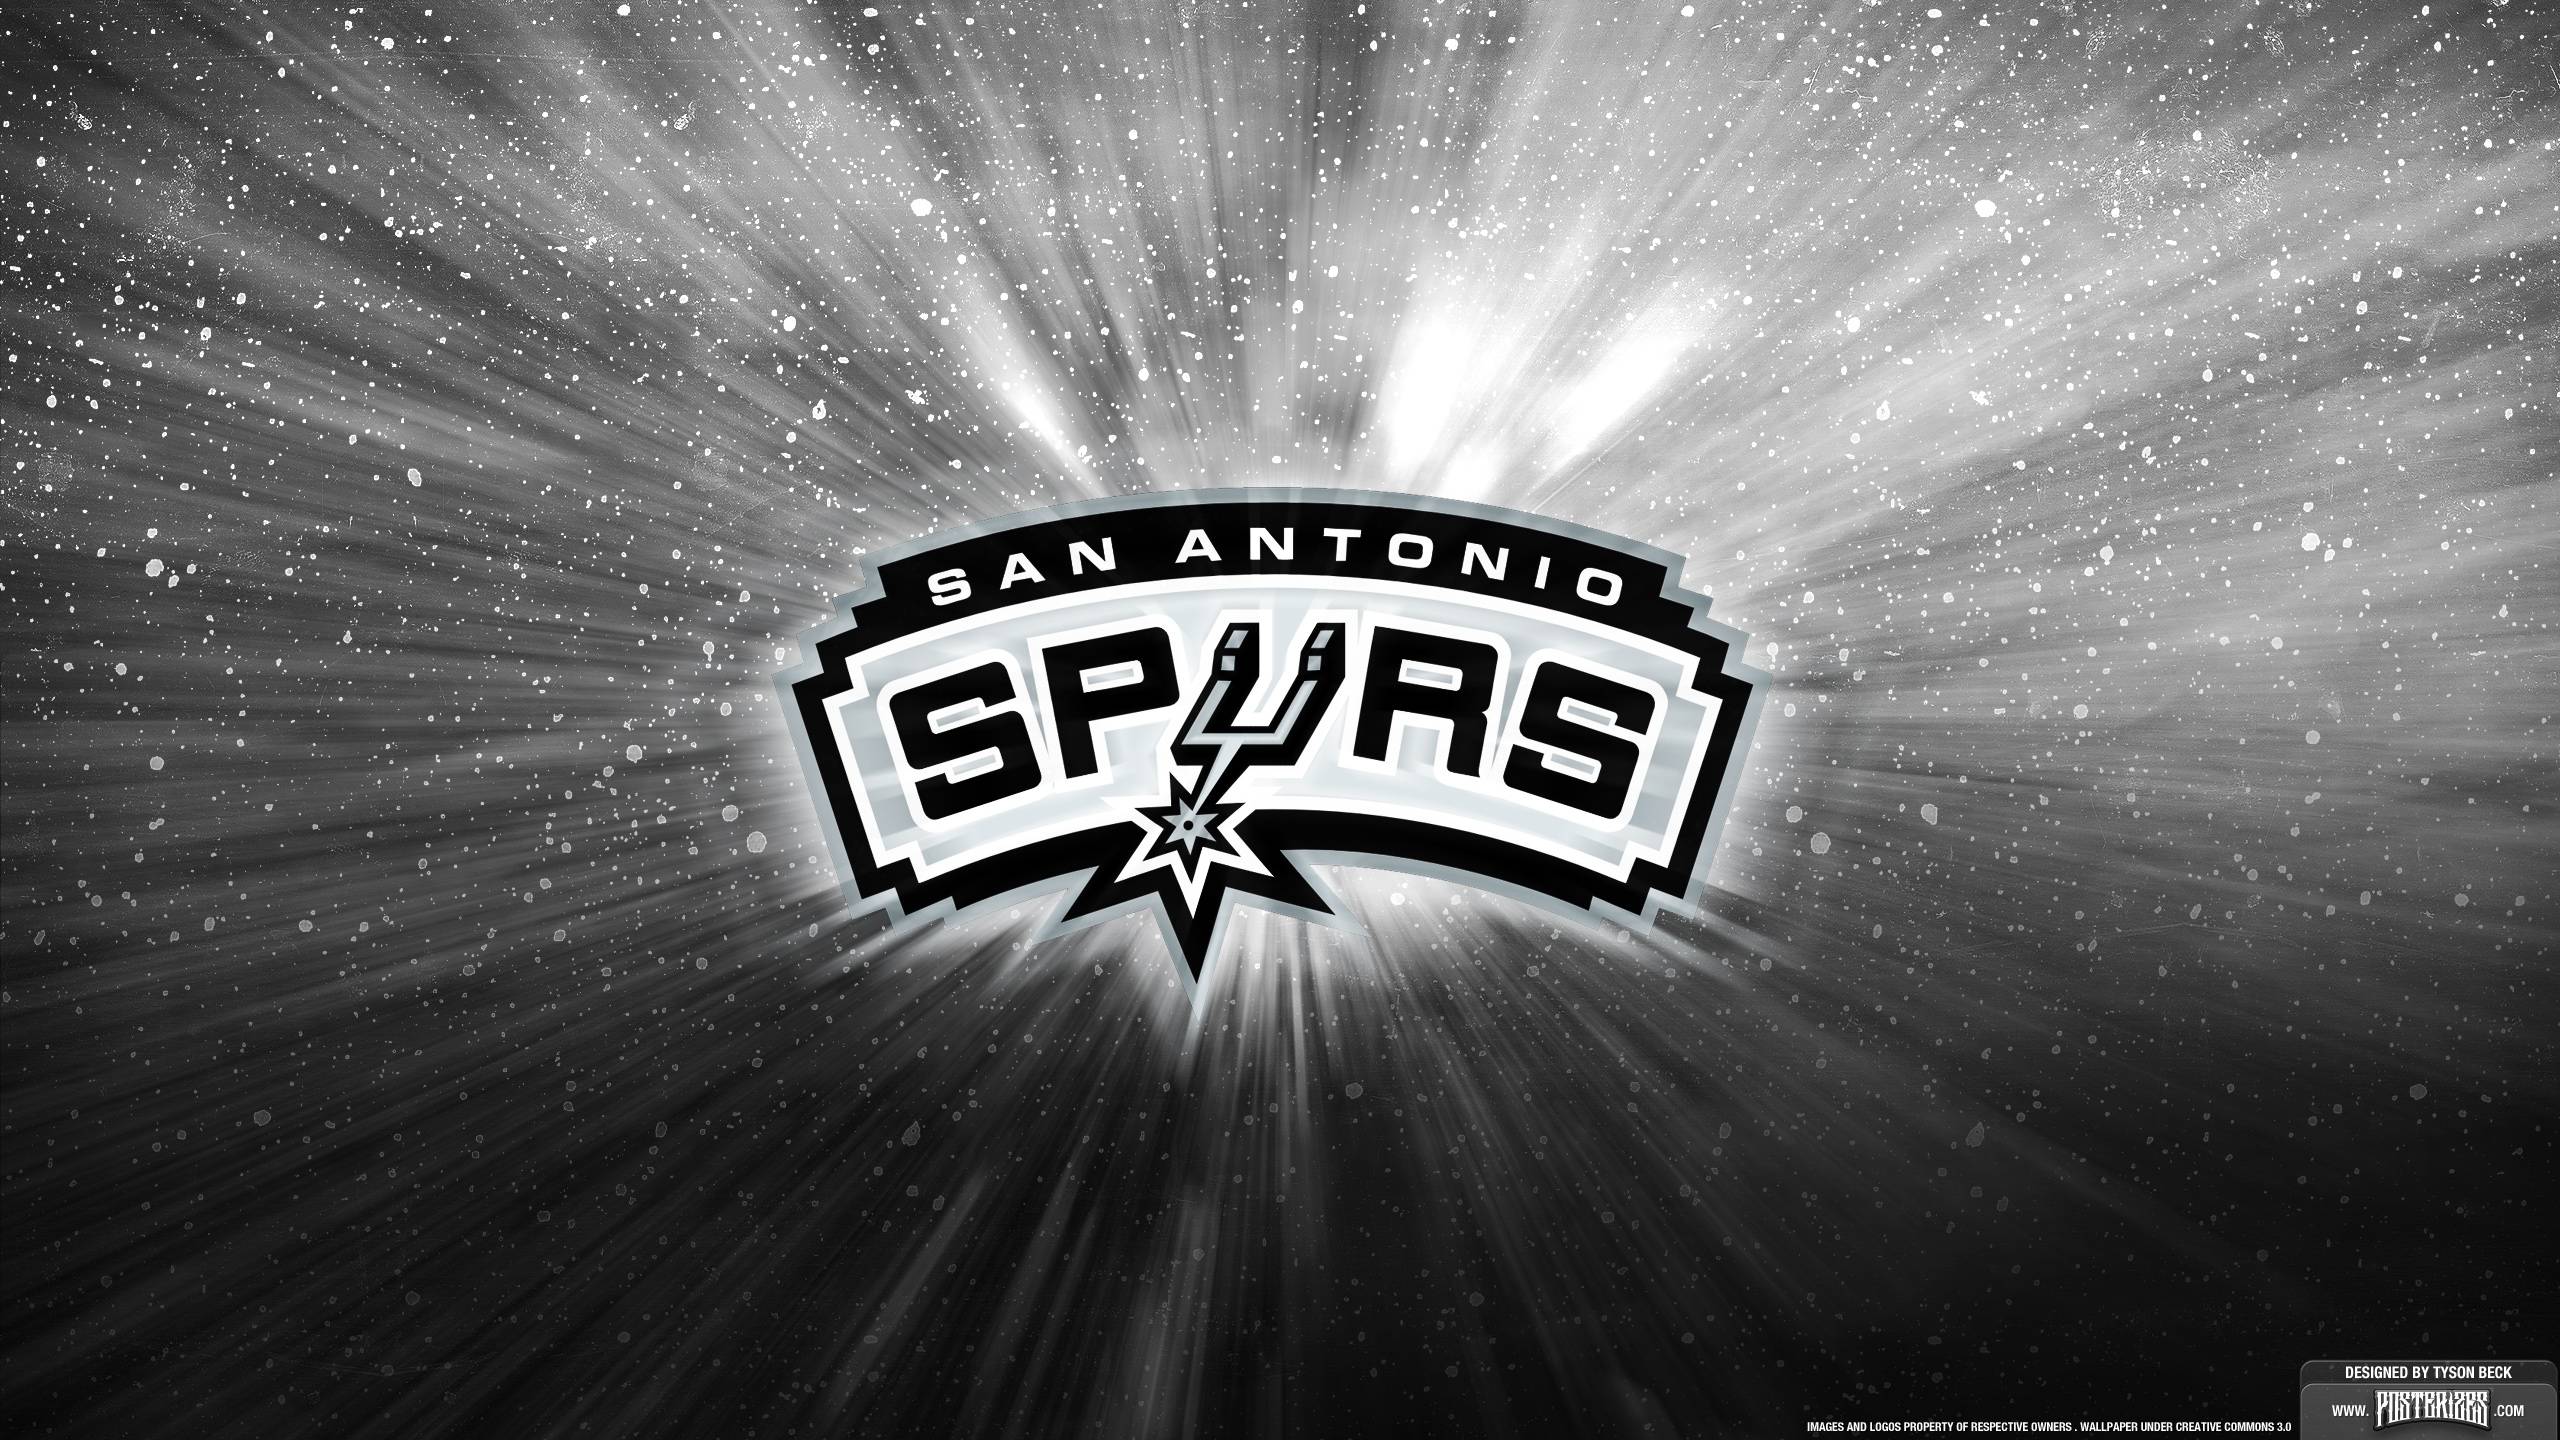 San Antonio Spurs. Posterizes. NBA Wallpaper & Basketball